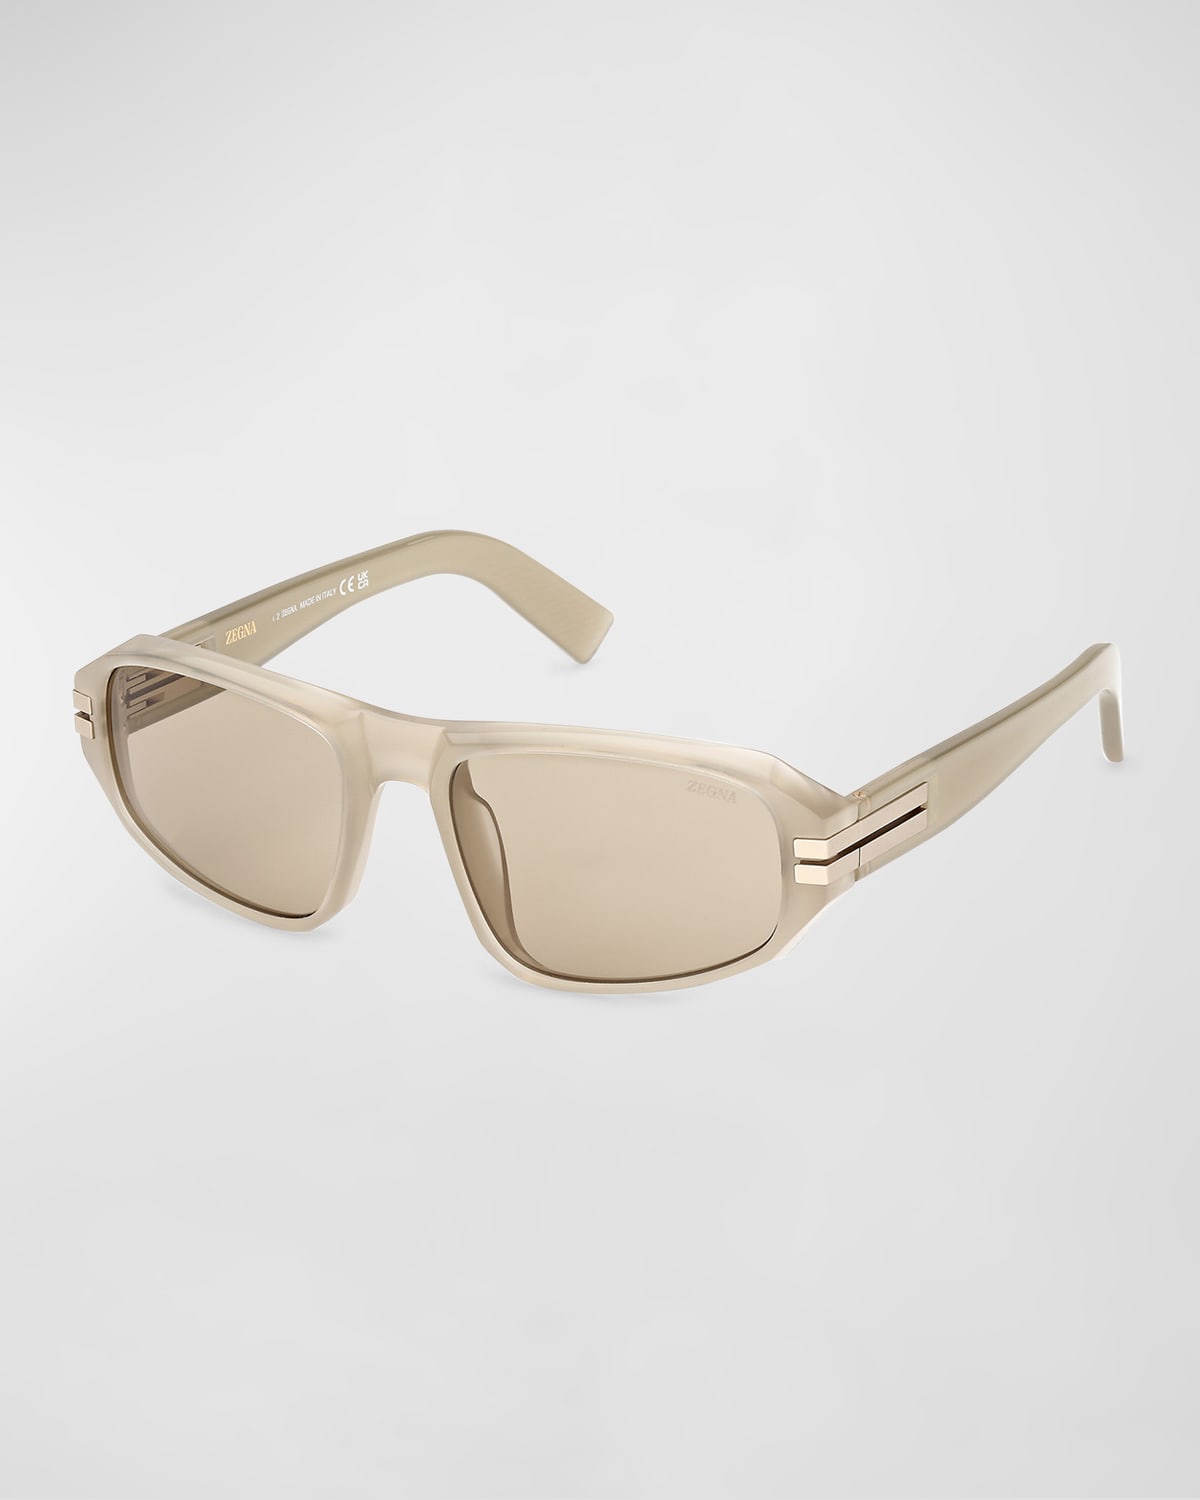 Zegna Men's Polarized Acetate Square Sunglasses In Neutral